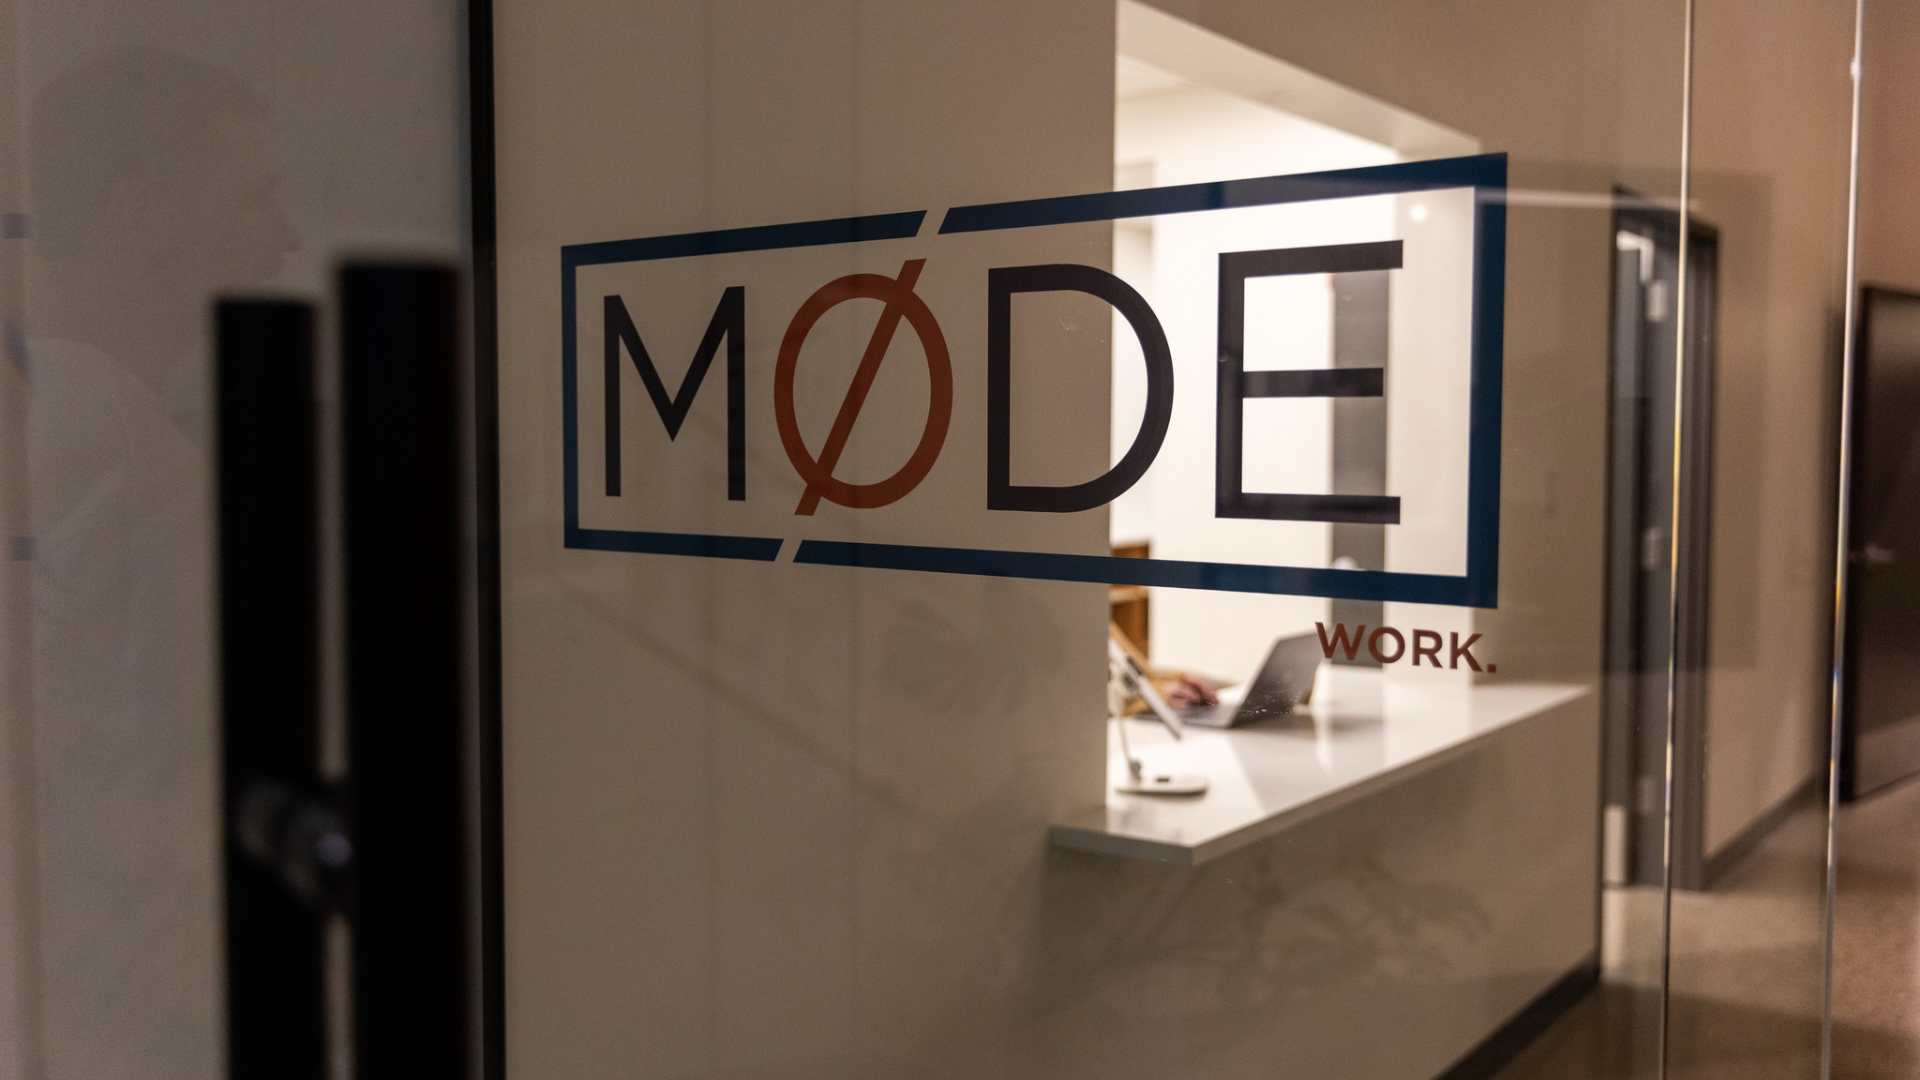 Mode company logo signage on office wall